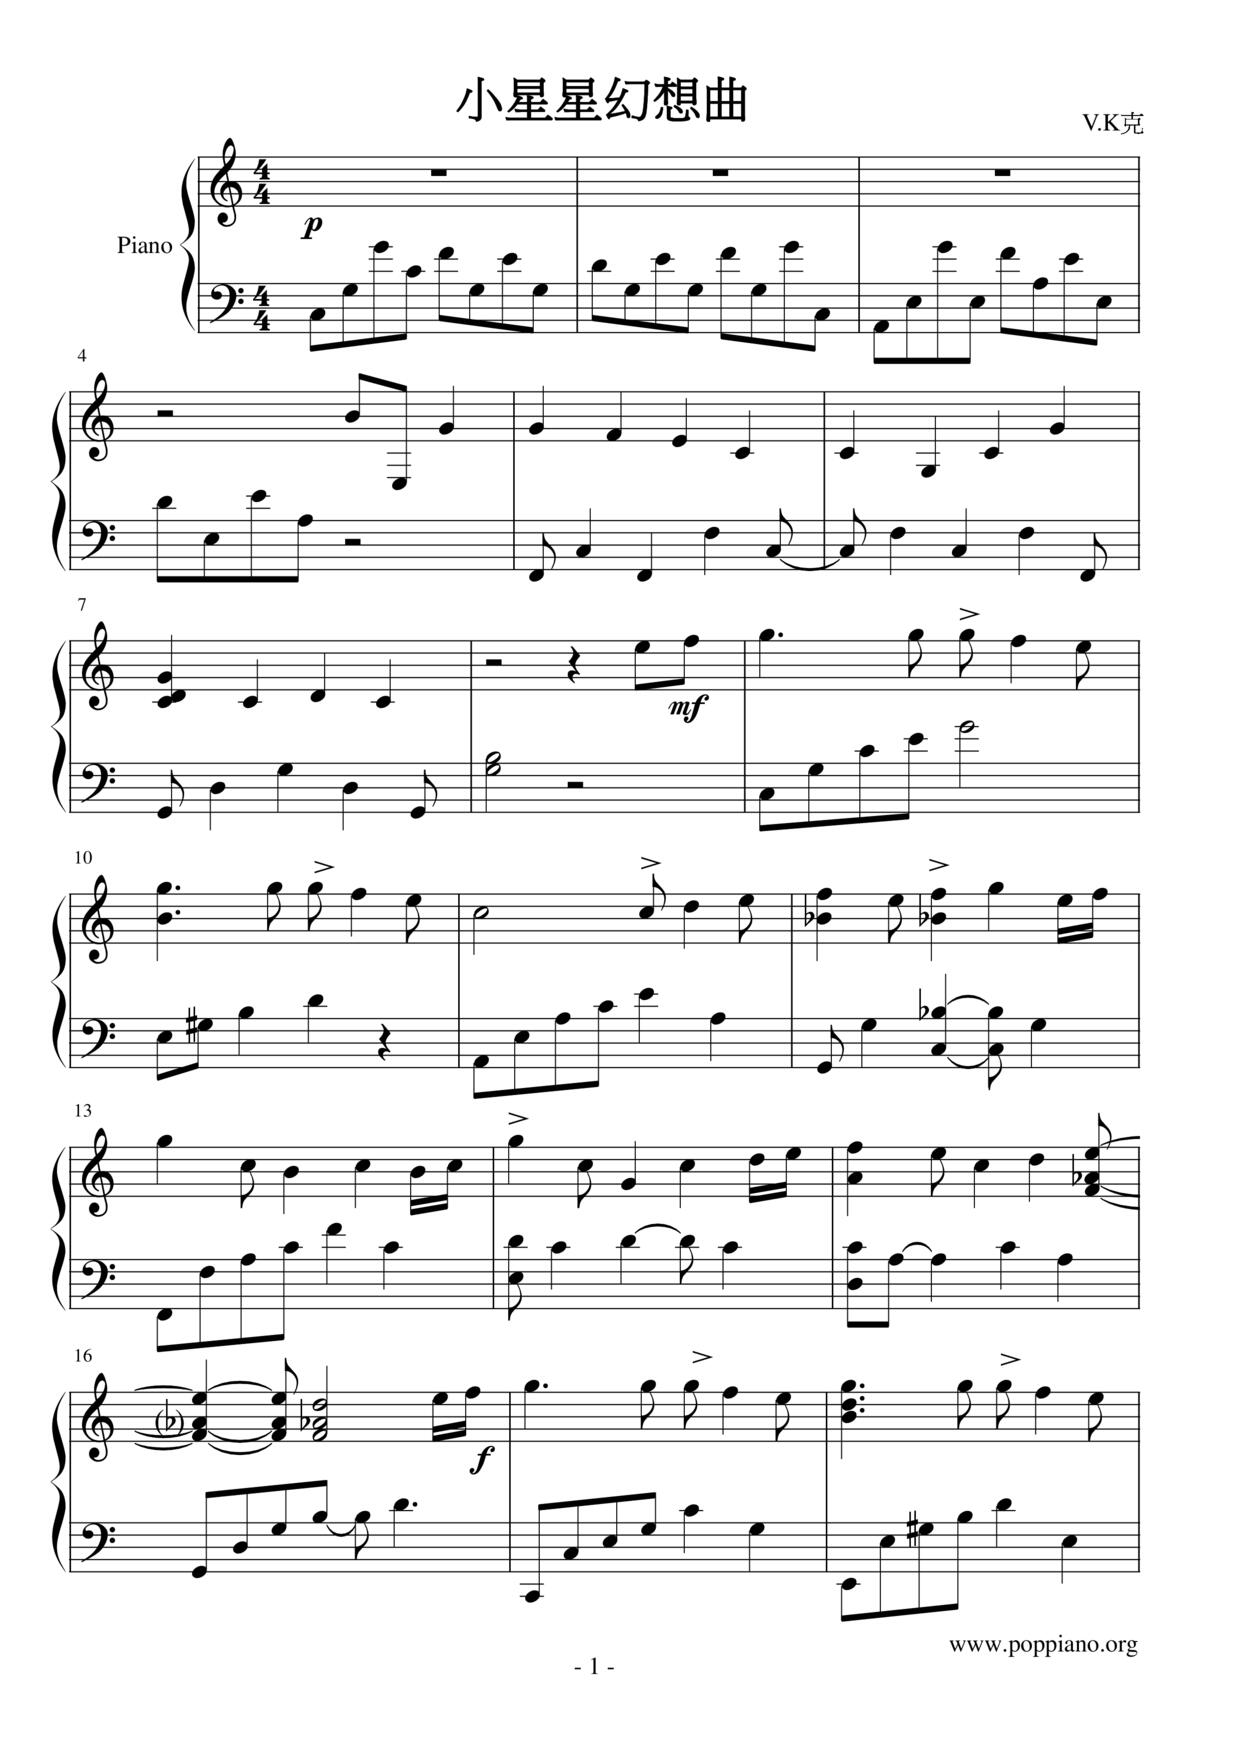 Little Star Fantasia Score